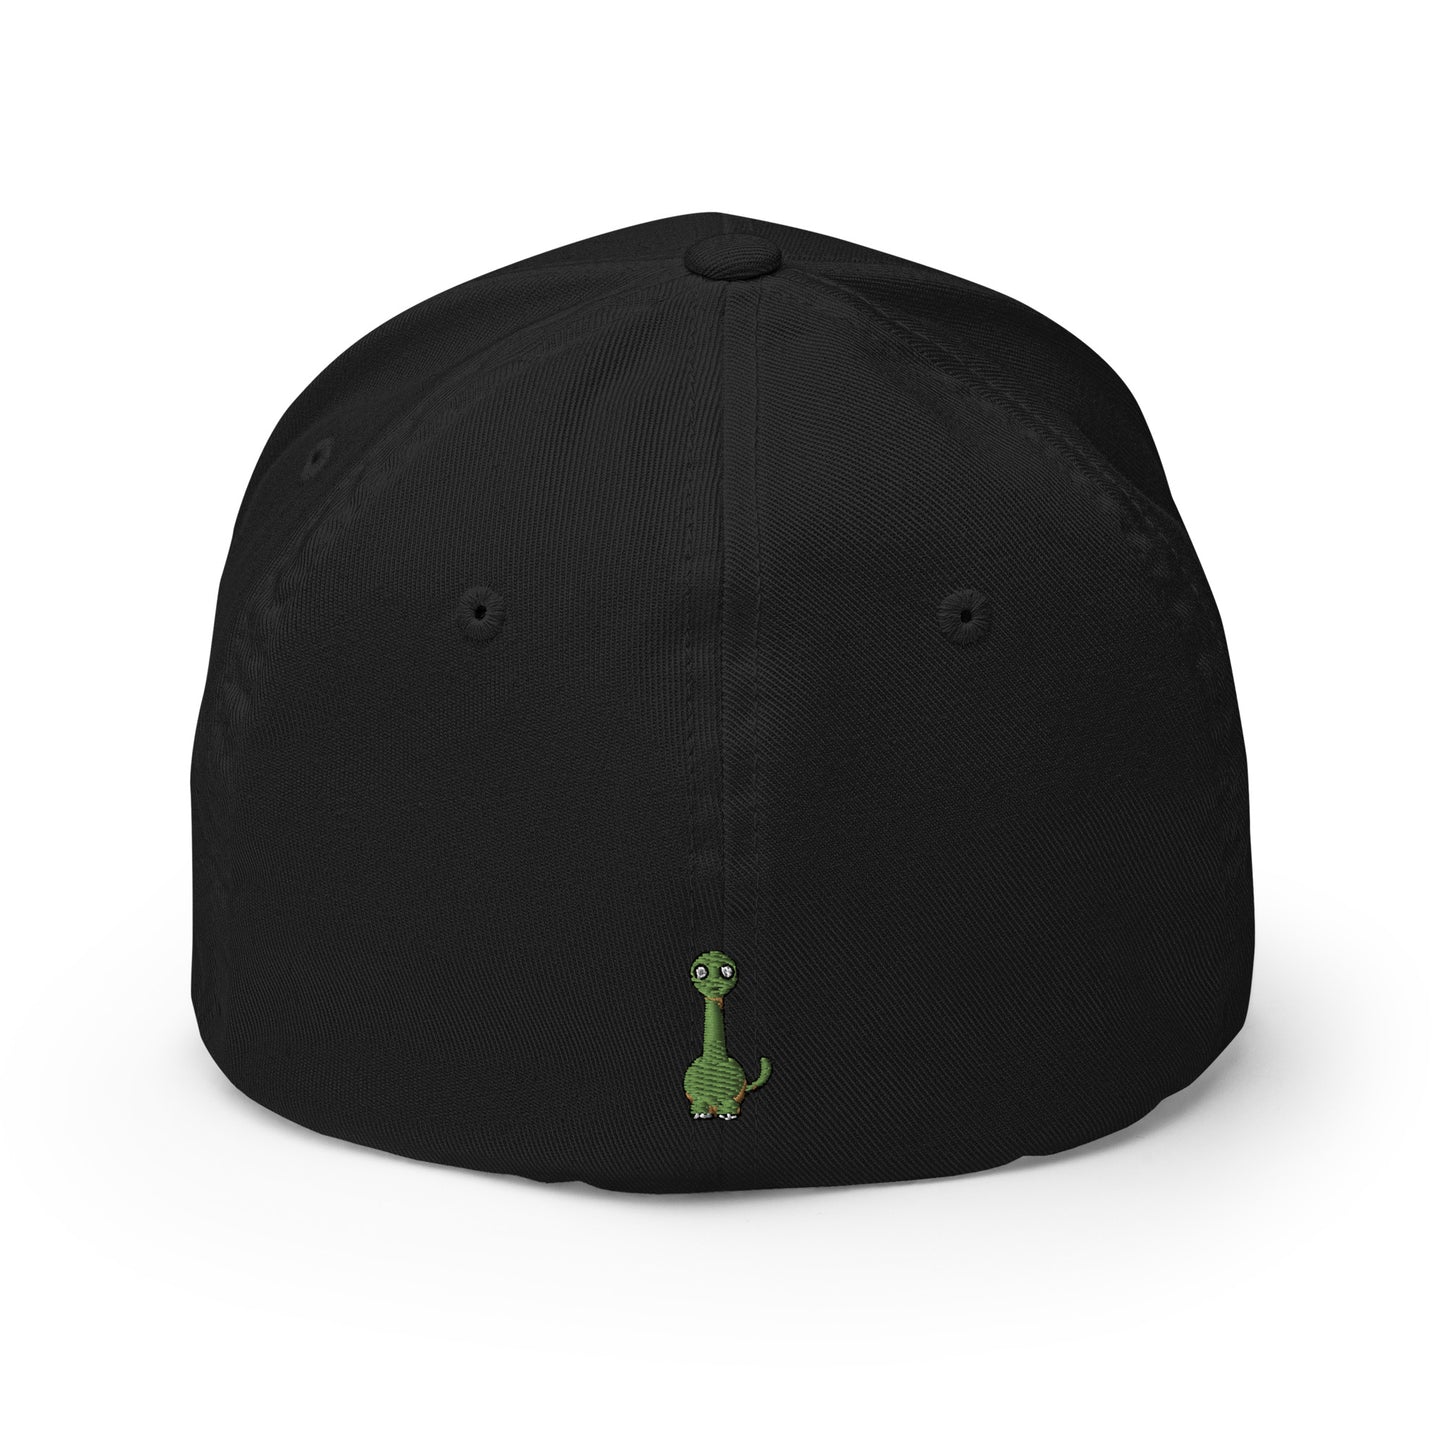 Baseball Cap with Dinosaur Symbol